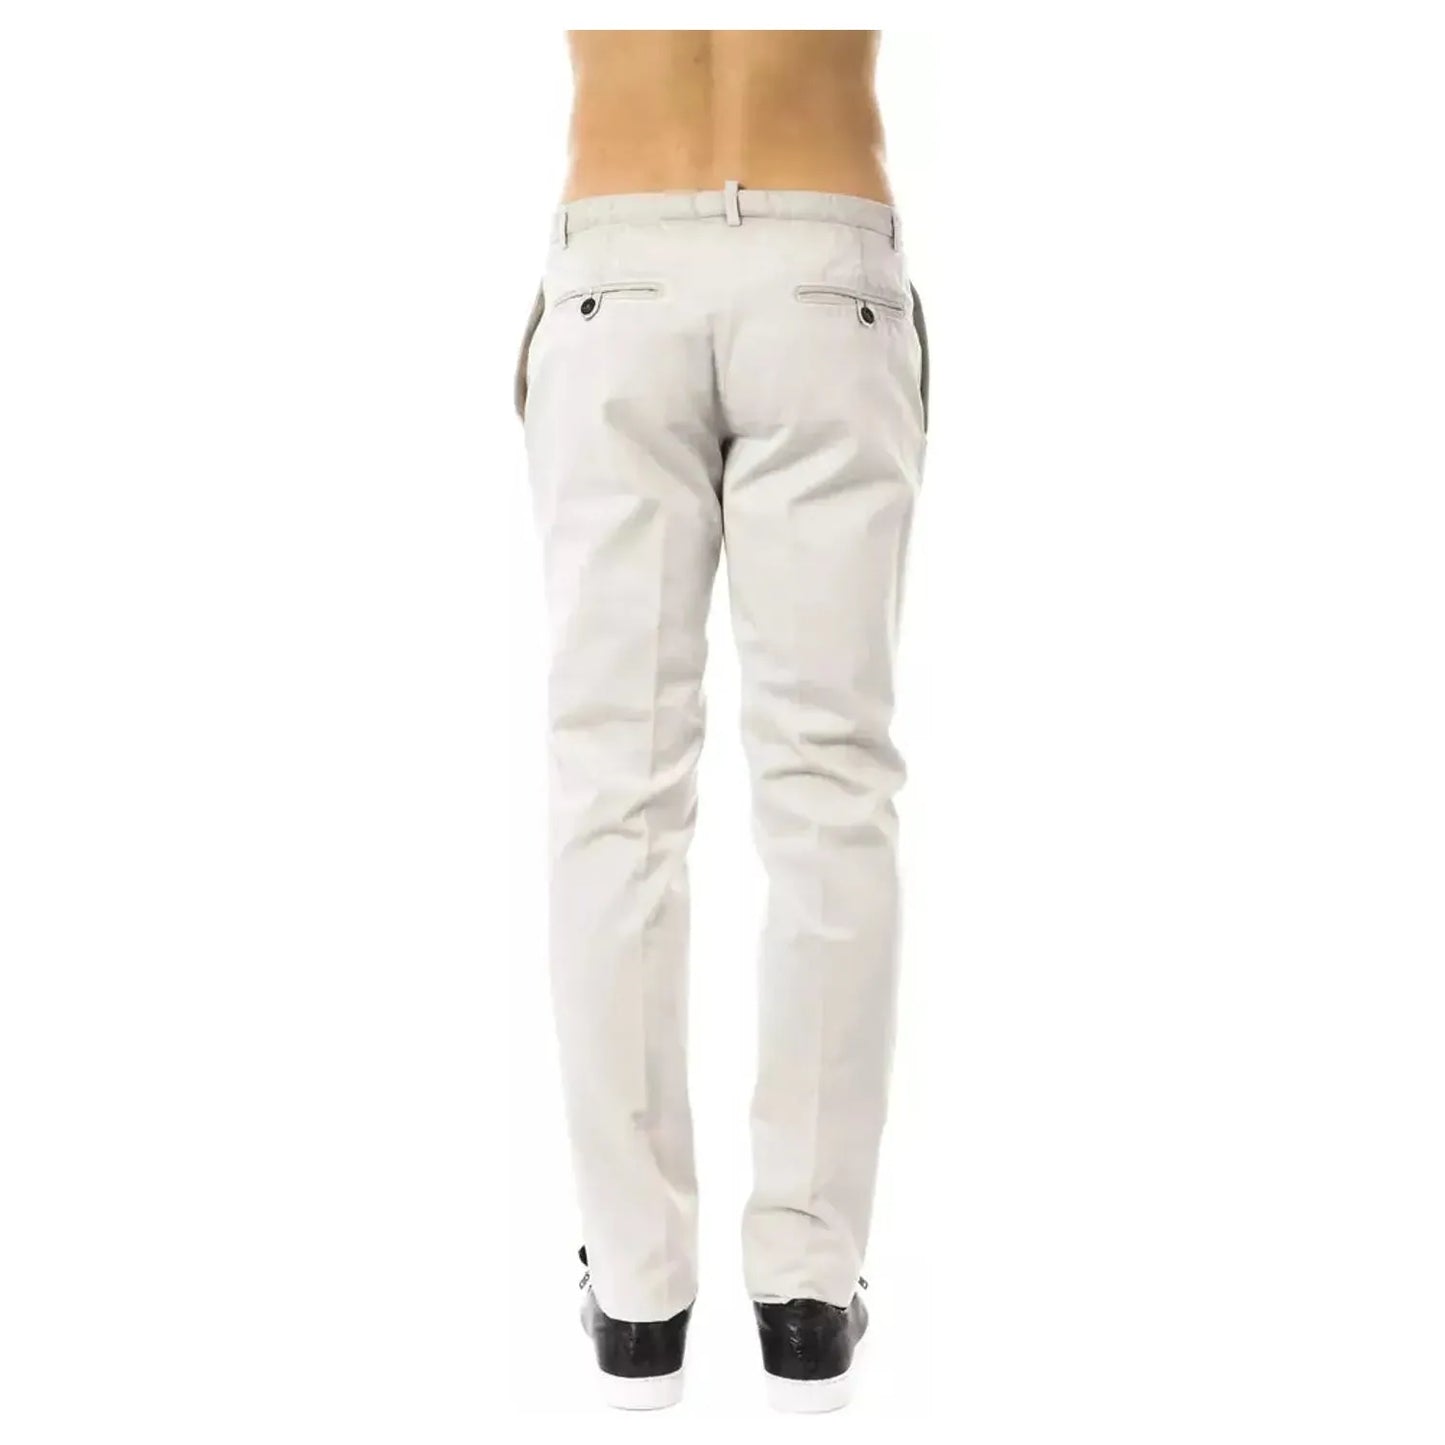 Uominitaliani Elegant Gray Casual Cotton Pants Jeans & Pants jeans-pant-3